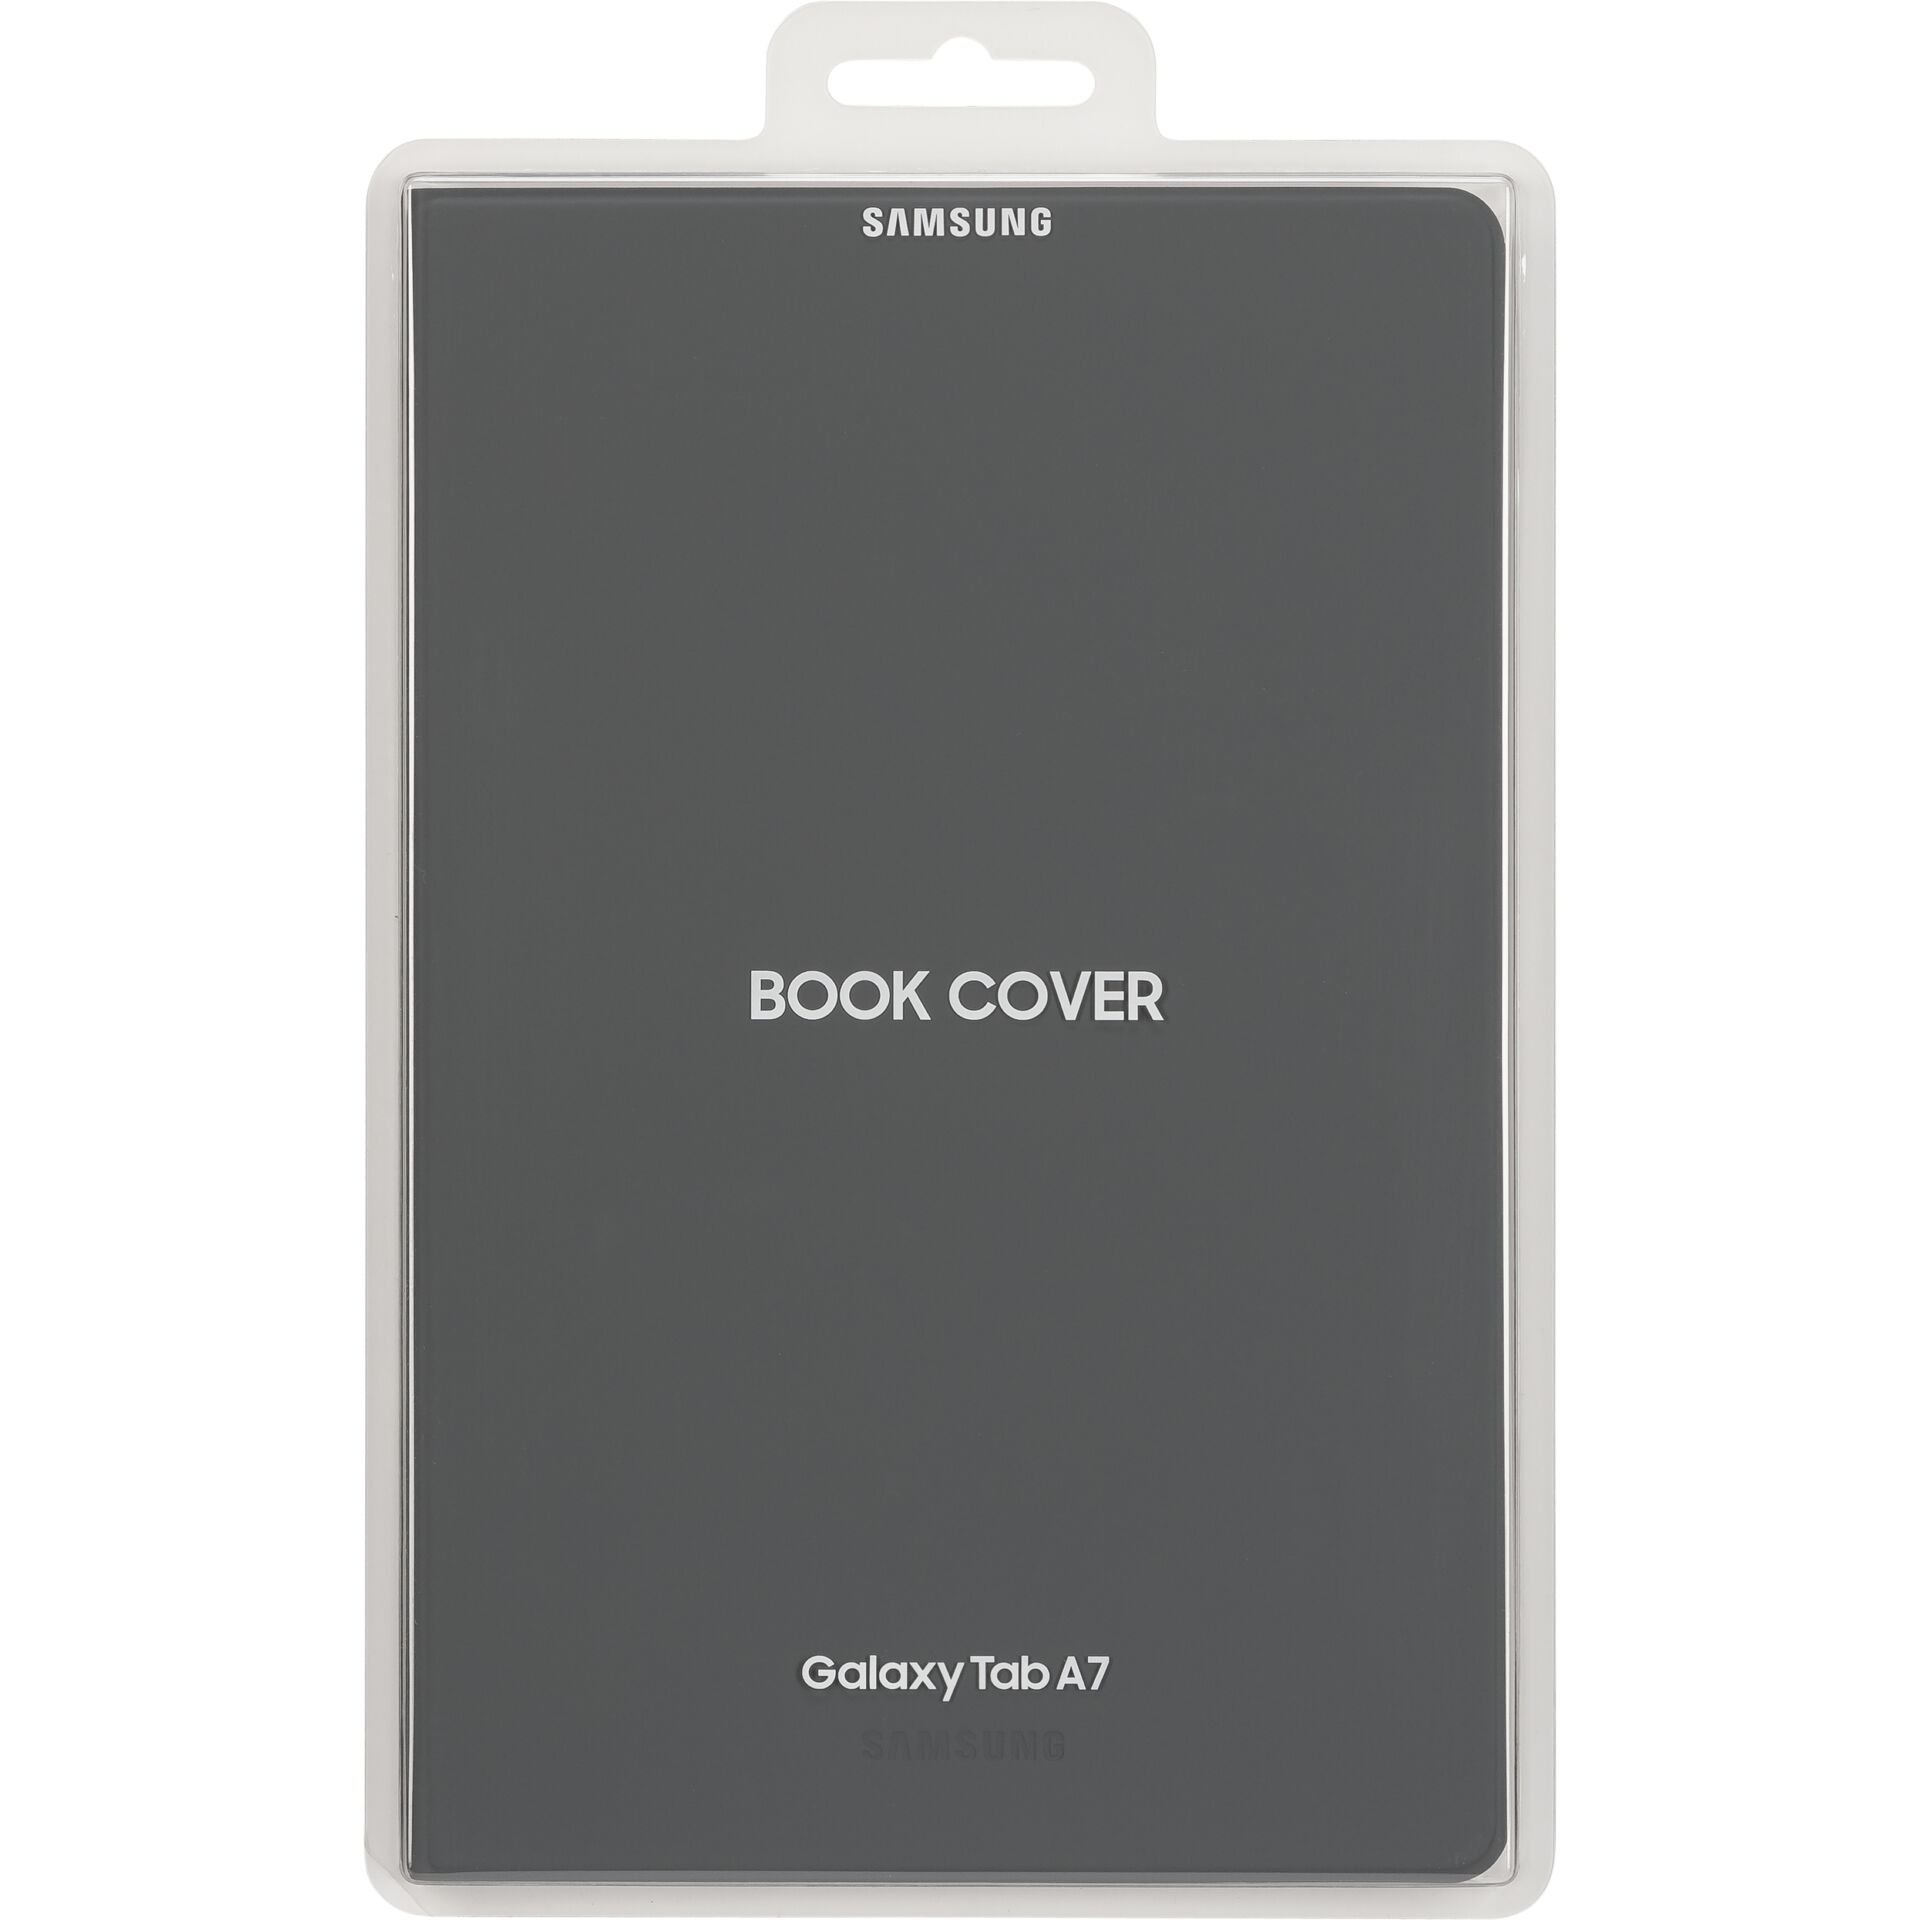 Samsung Book Cover Tab A7 grigio